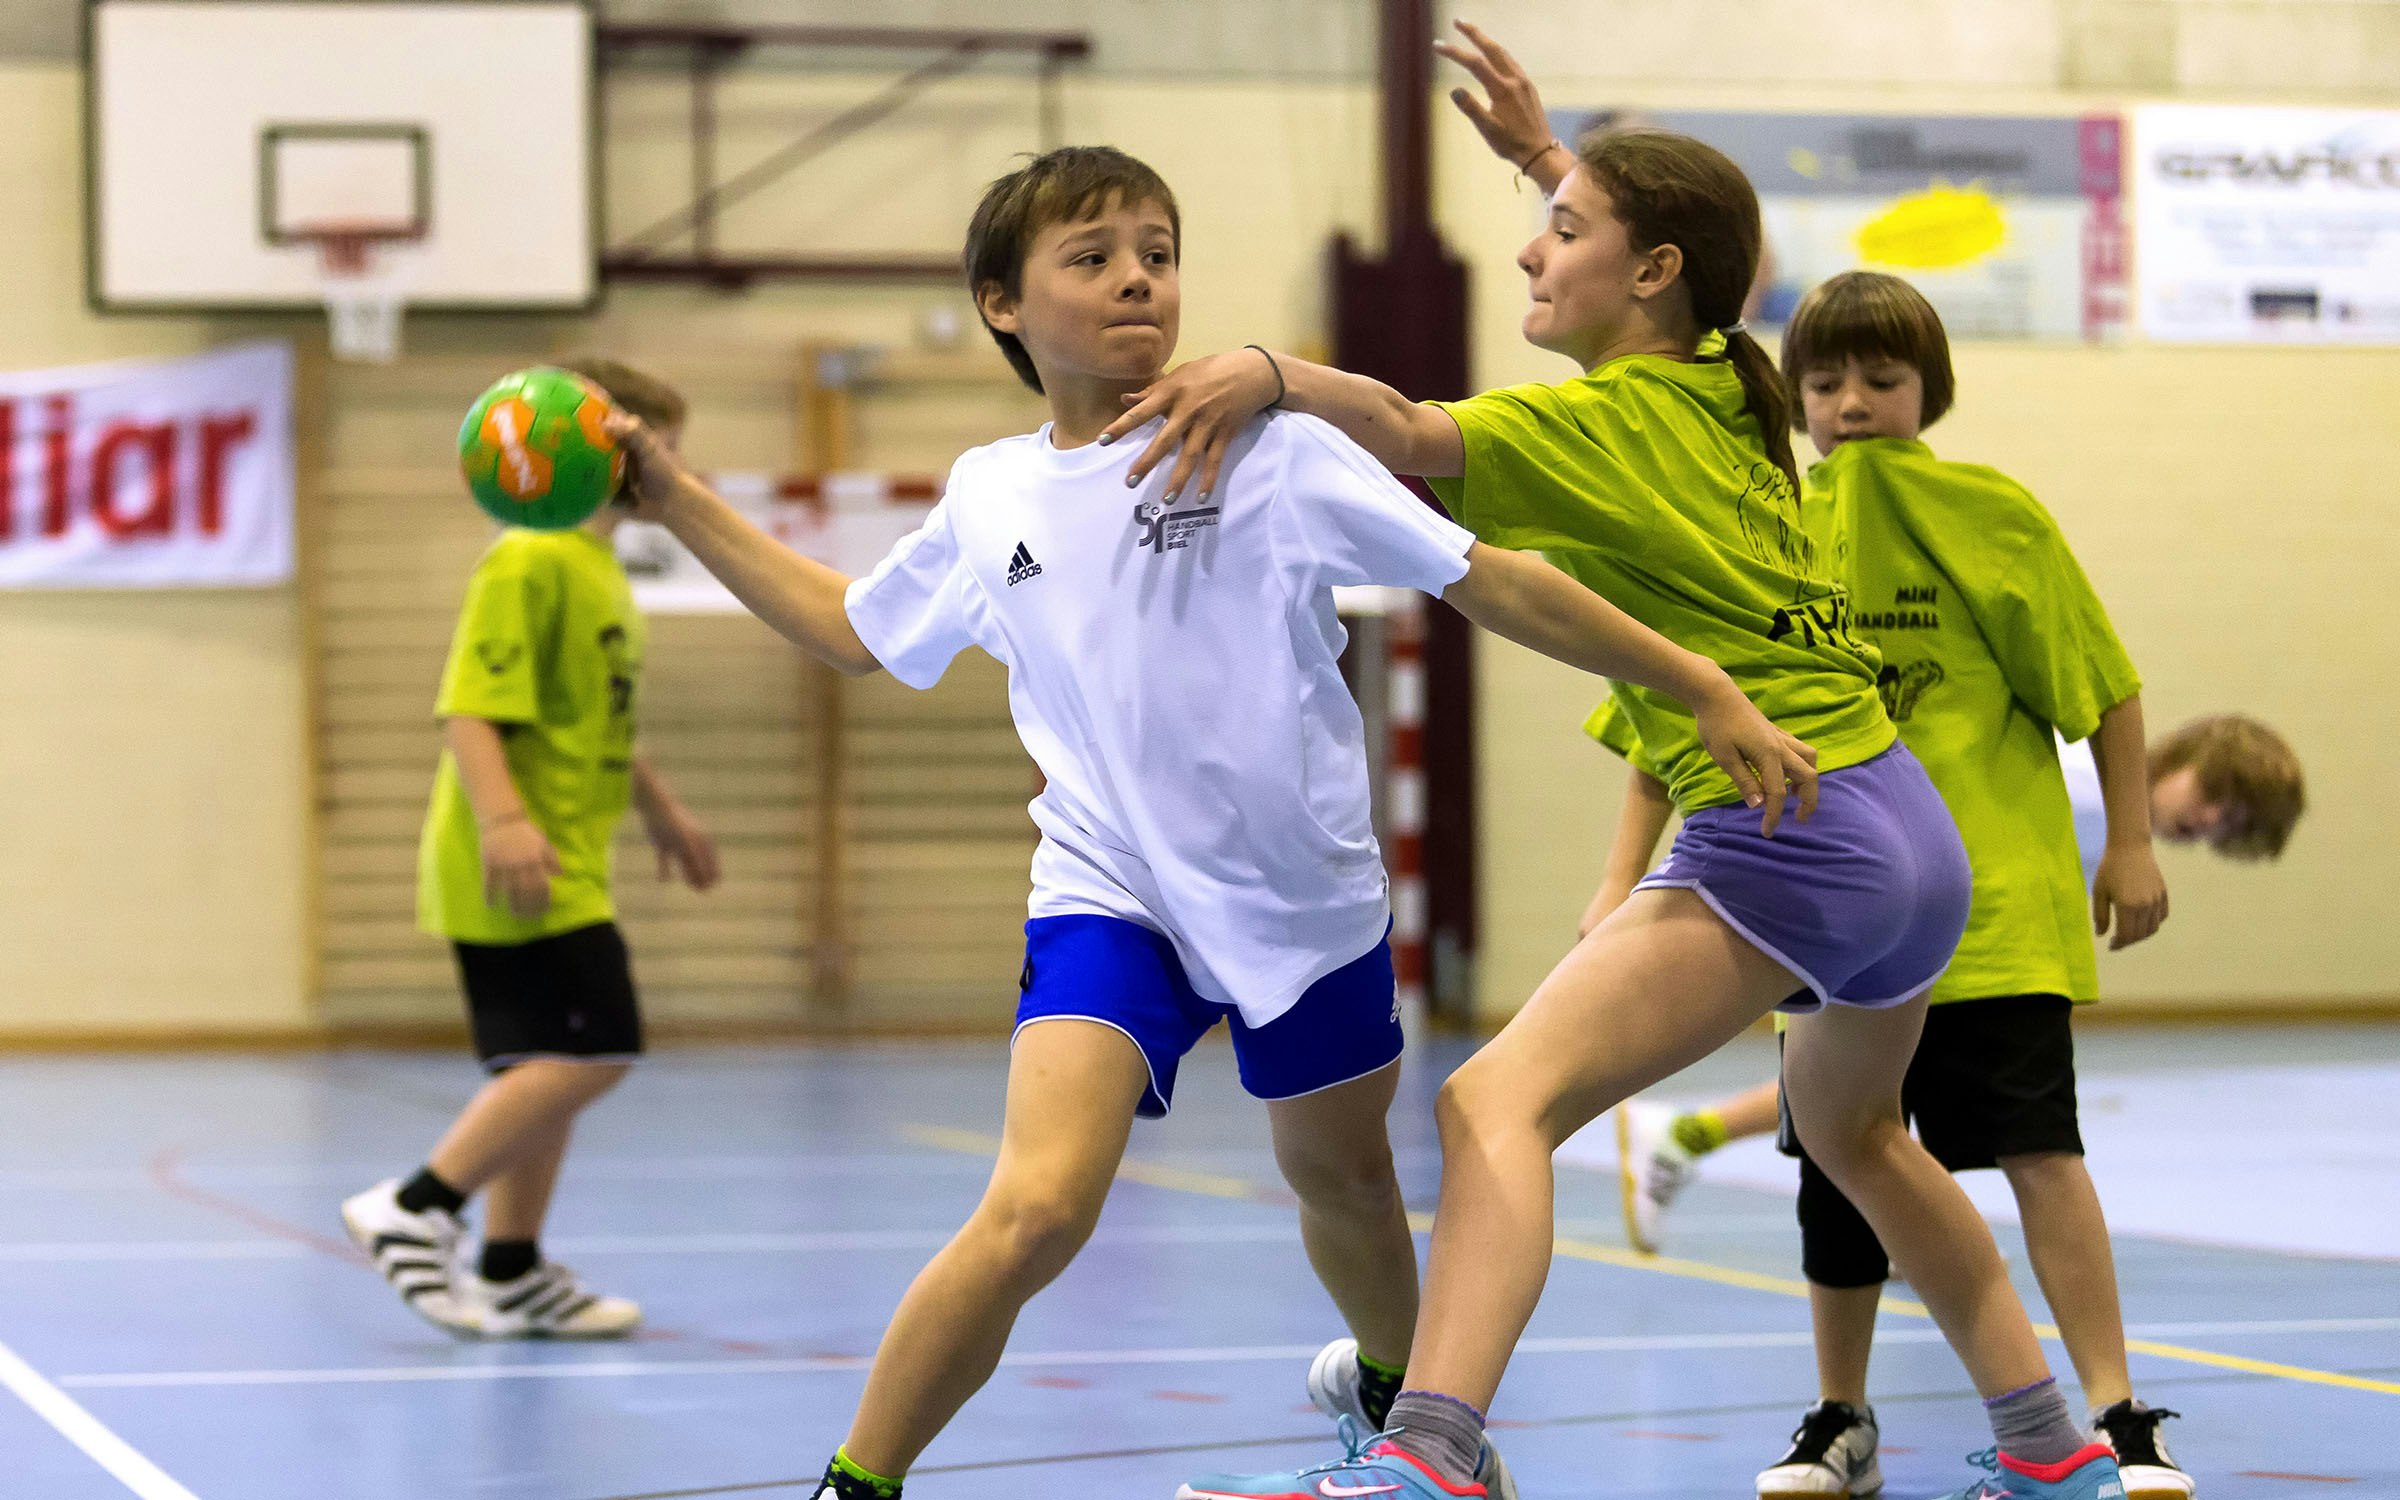 Mannschaftssport, Kindersport Foto: BASPO / Ueli Känzig